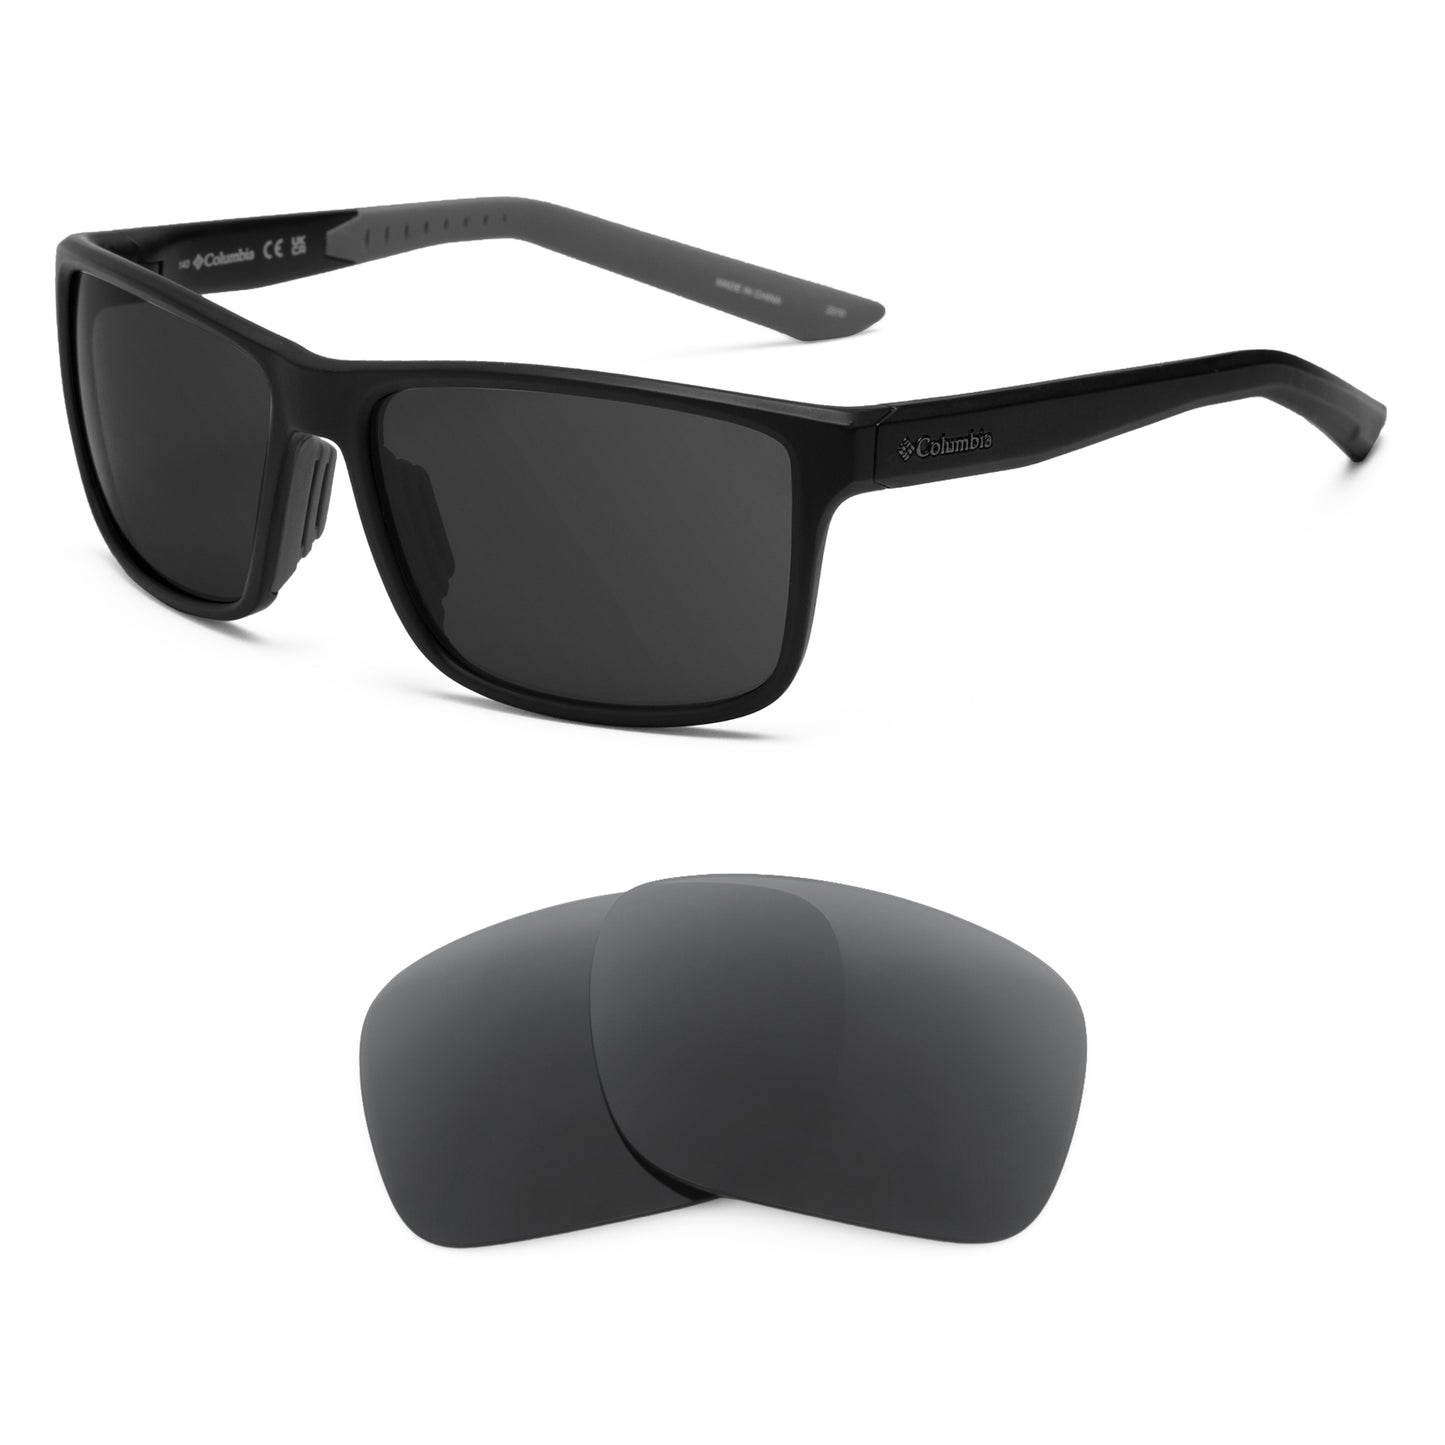 Columbia Flatlander sunglasses with replacement lenses